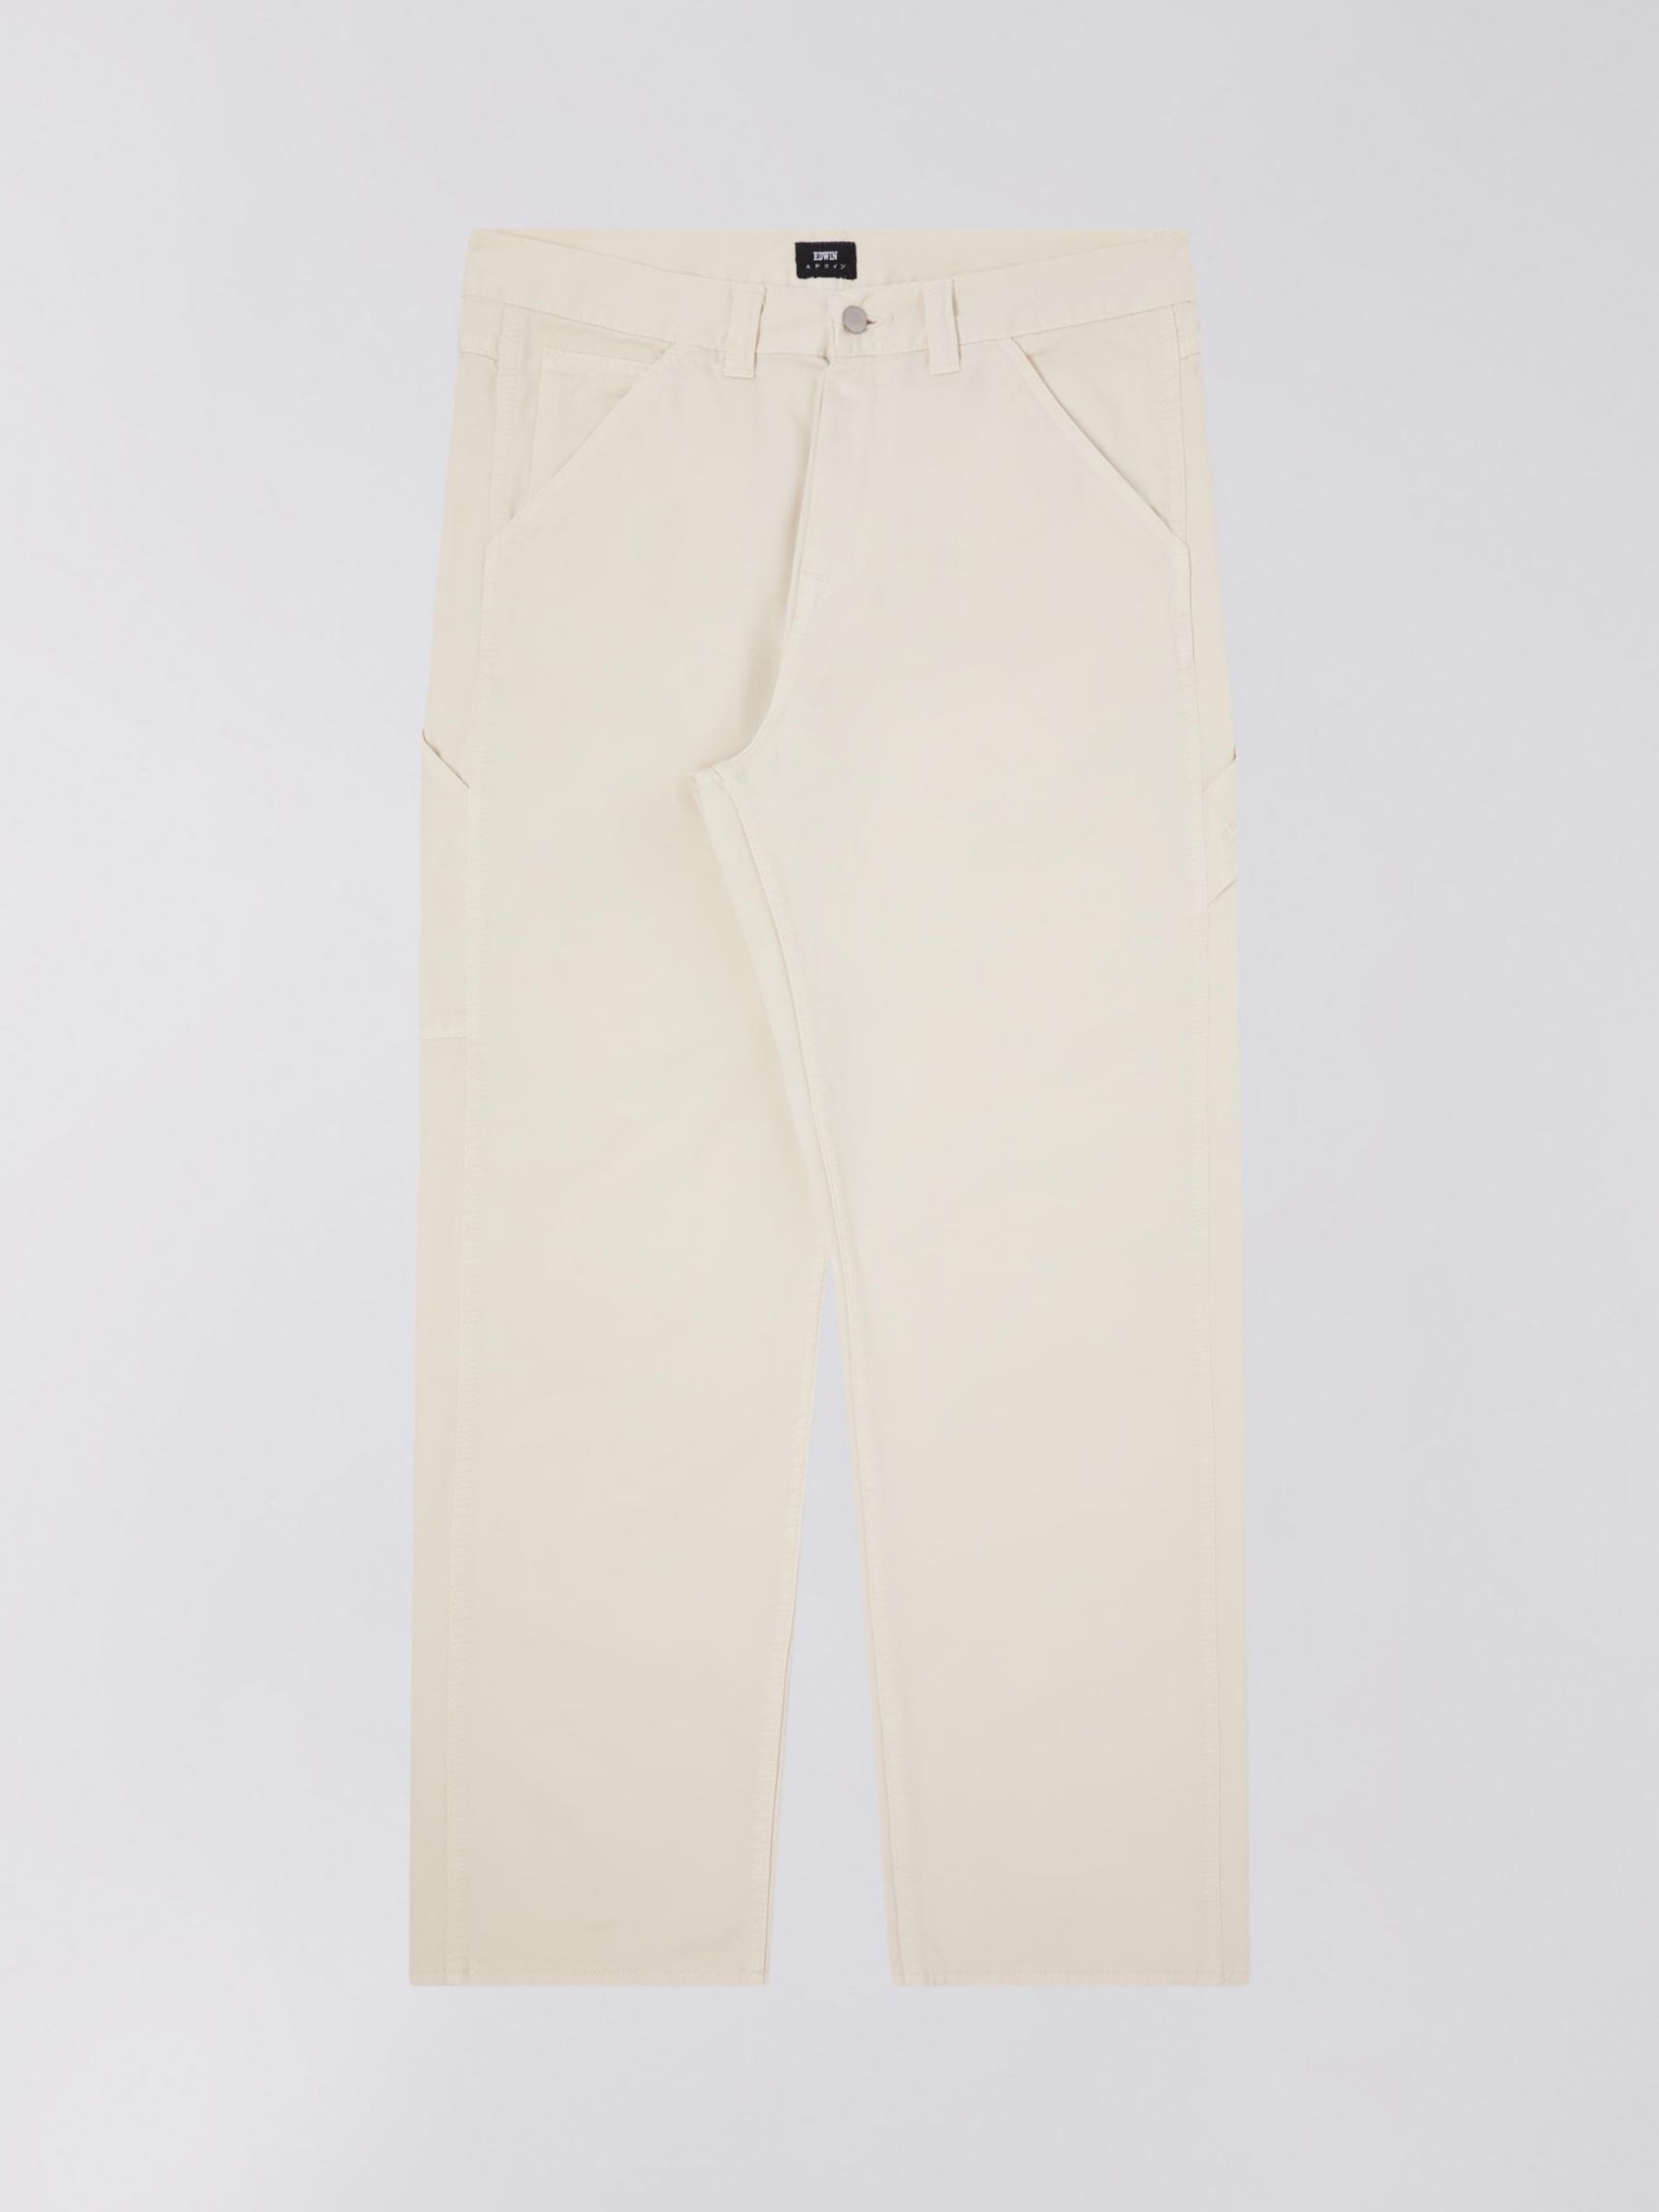 Edwin Delta Work Trousers, White, 38R